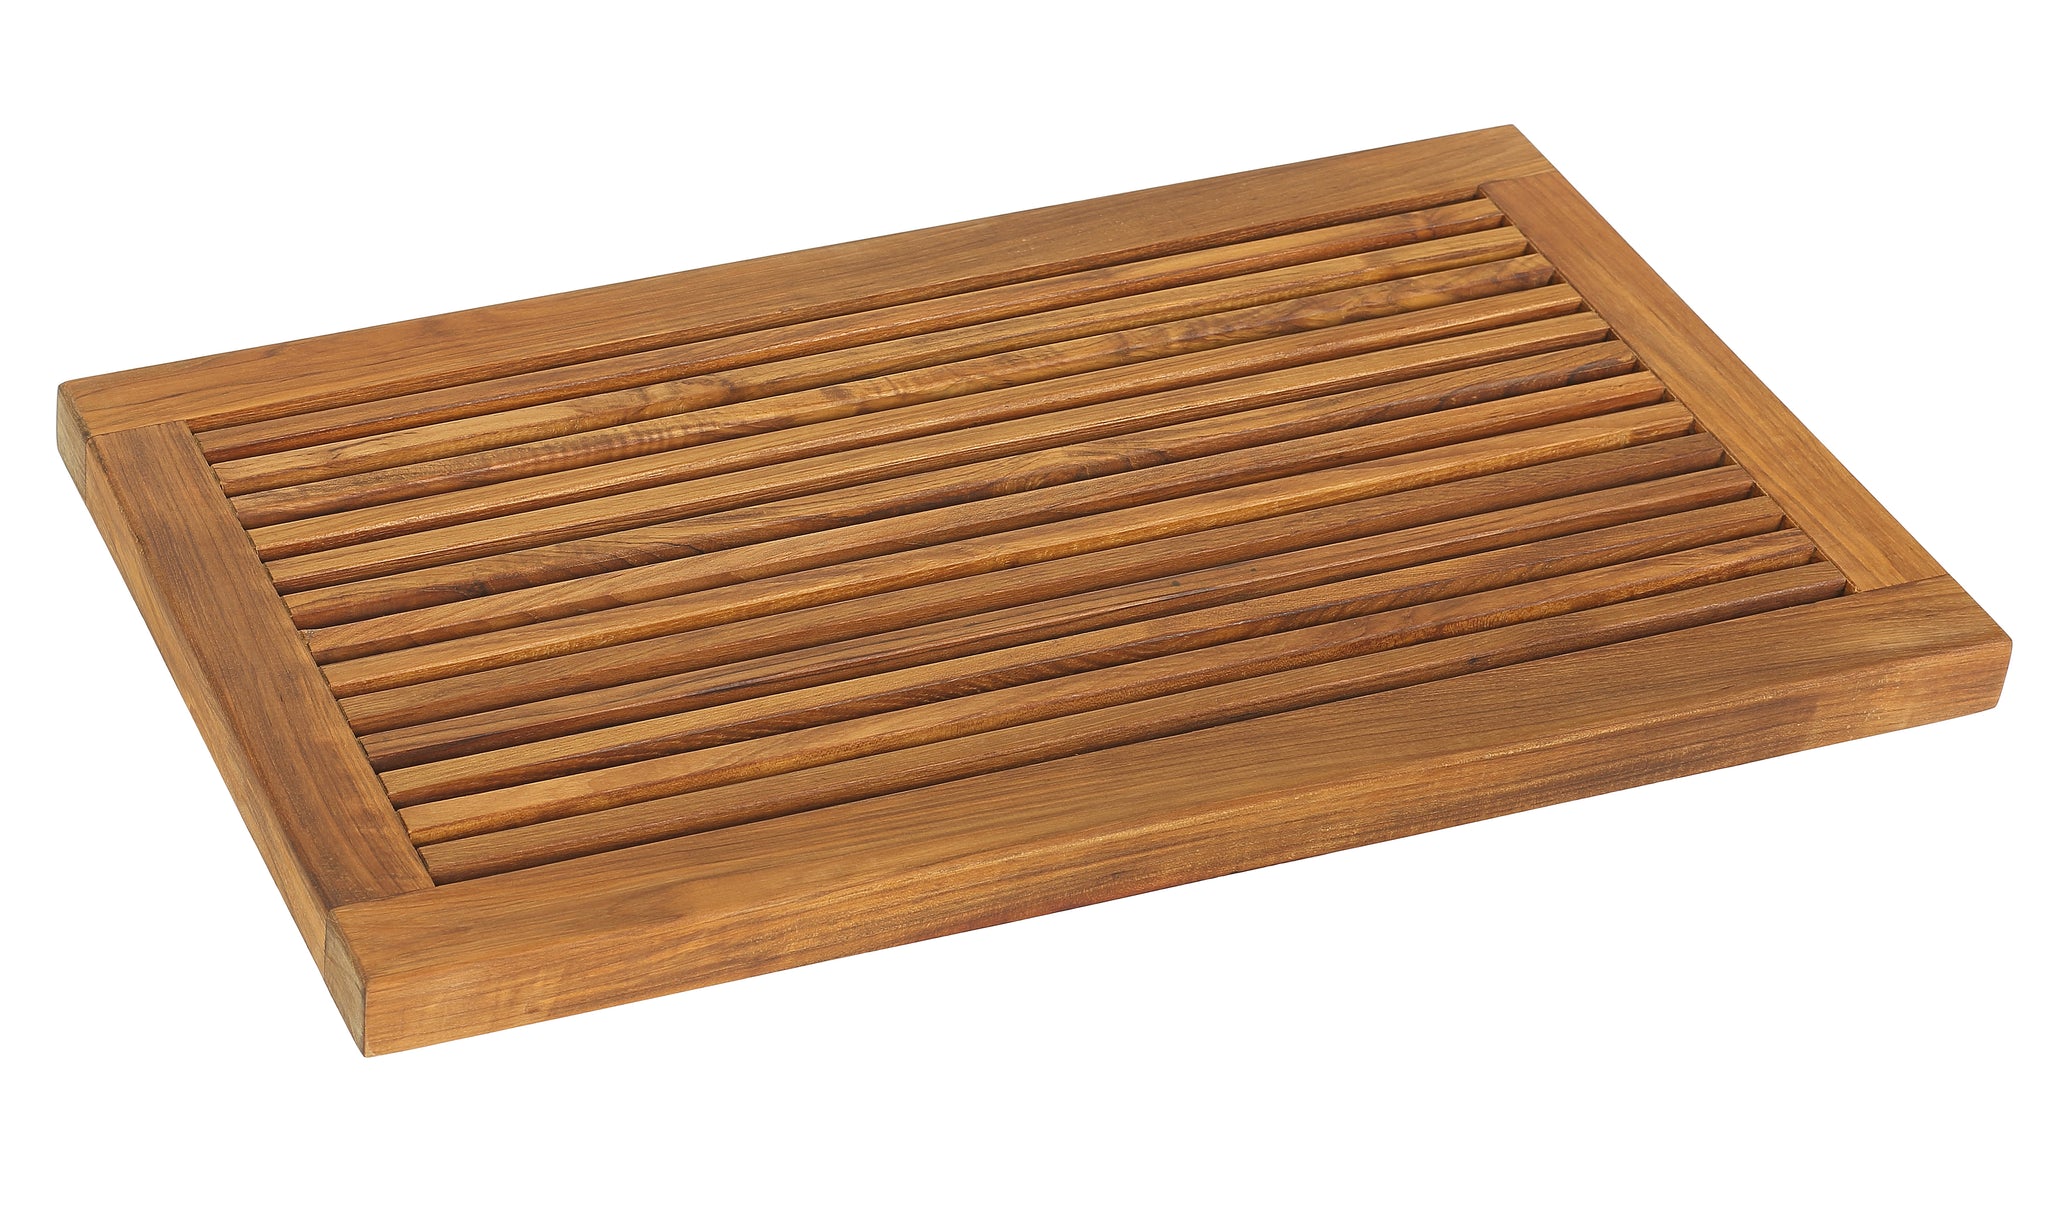 Bare Decor Dasha Spa Bath or Door Mat in Solid Teak Wood Oiled Finish, Large: 31.5" x 17.75"